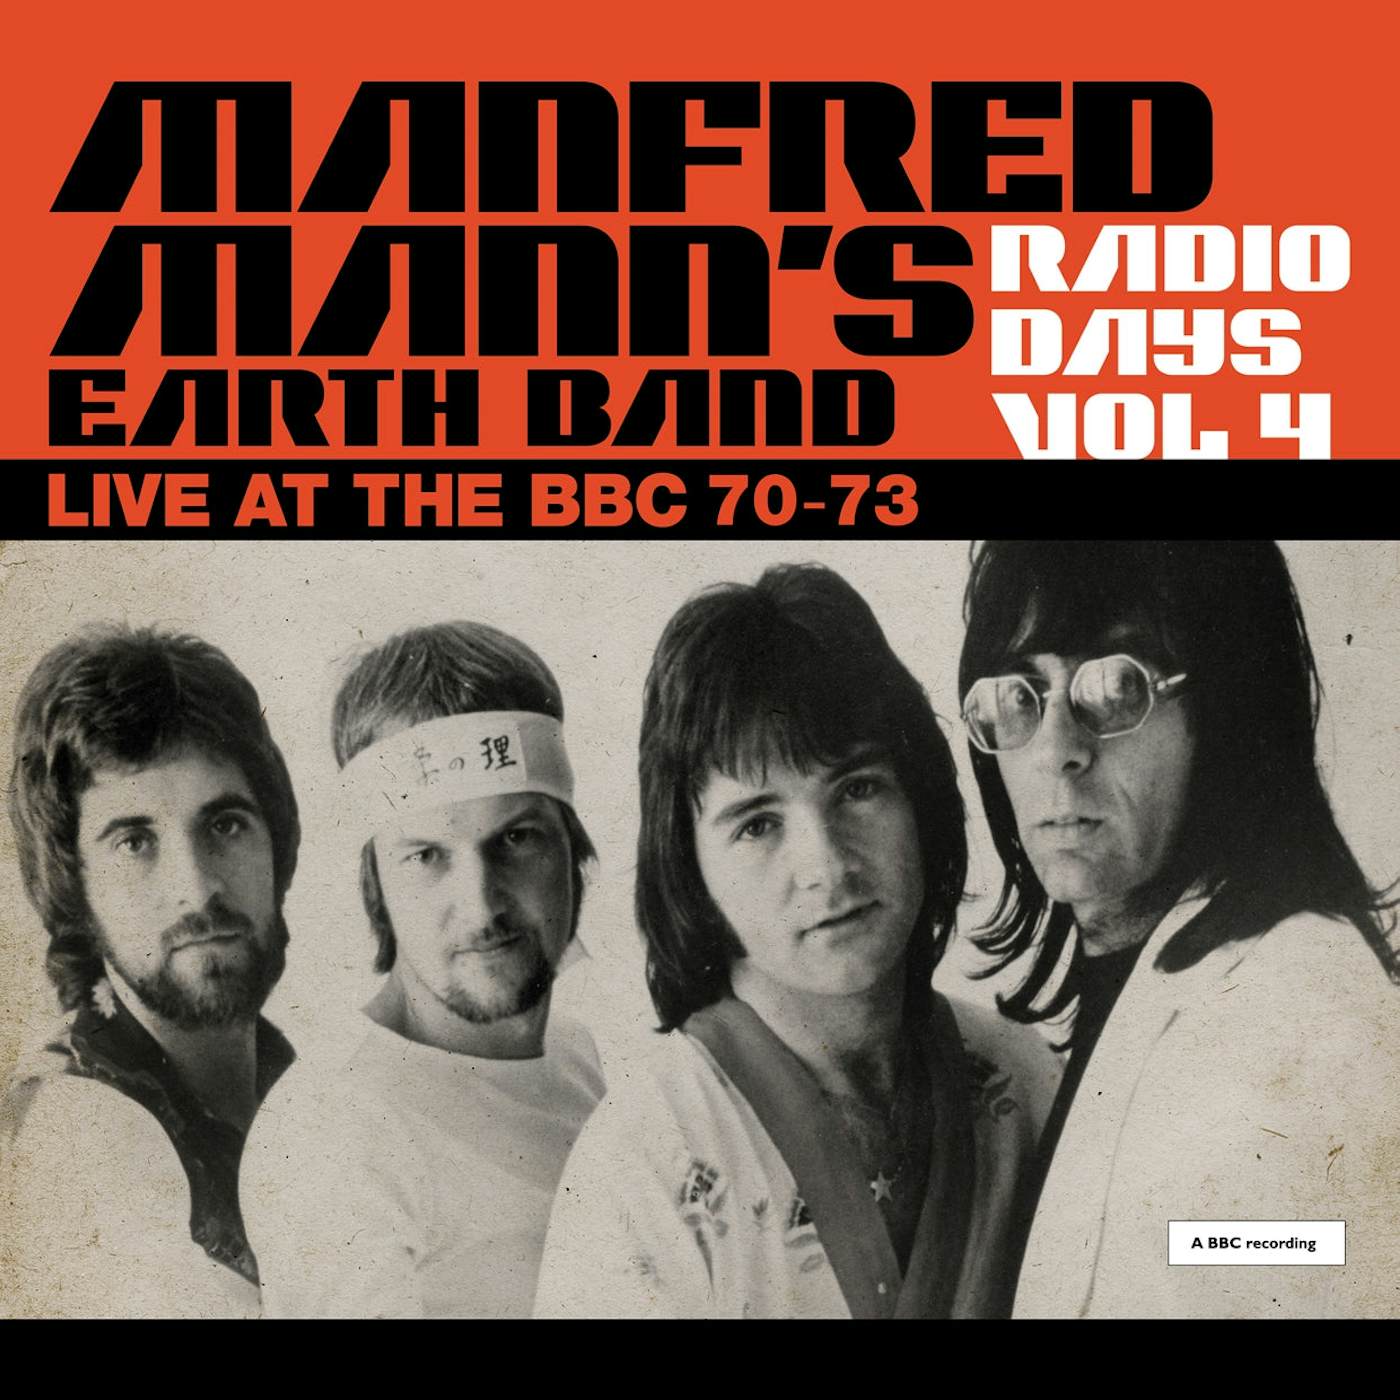 Manfred Mann'S Earth Band LP - Radio Days Vol. 4 - Live At The Bbc 70-73 (Vinyl)